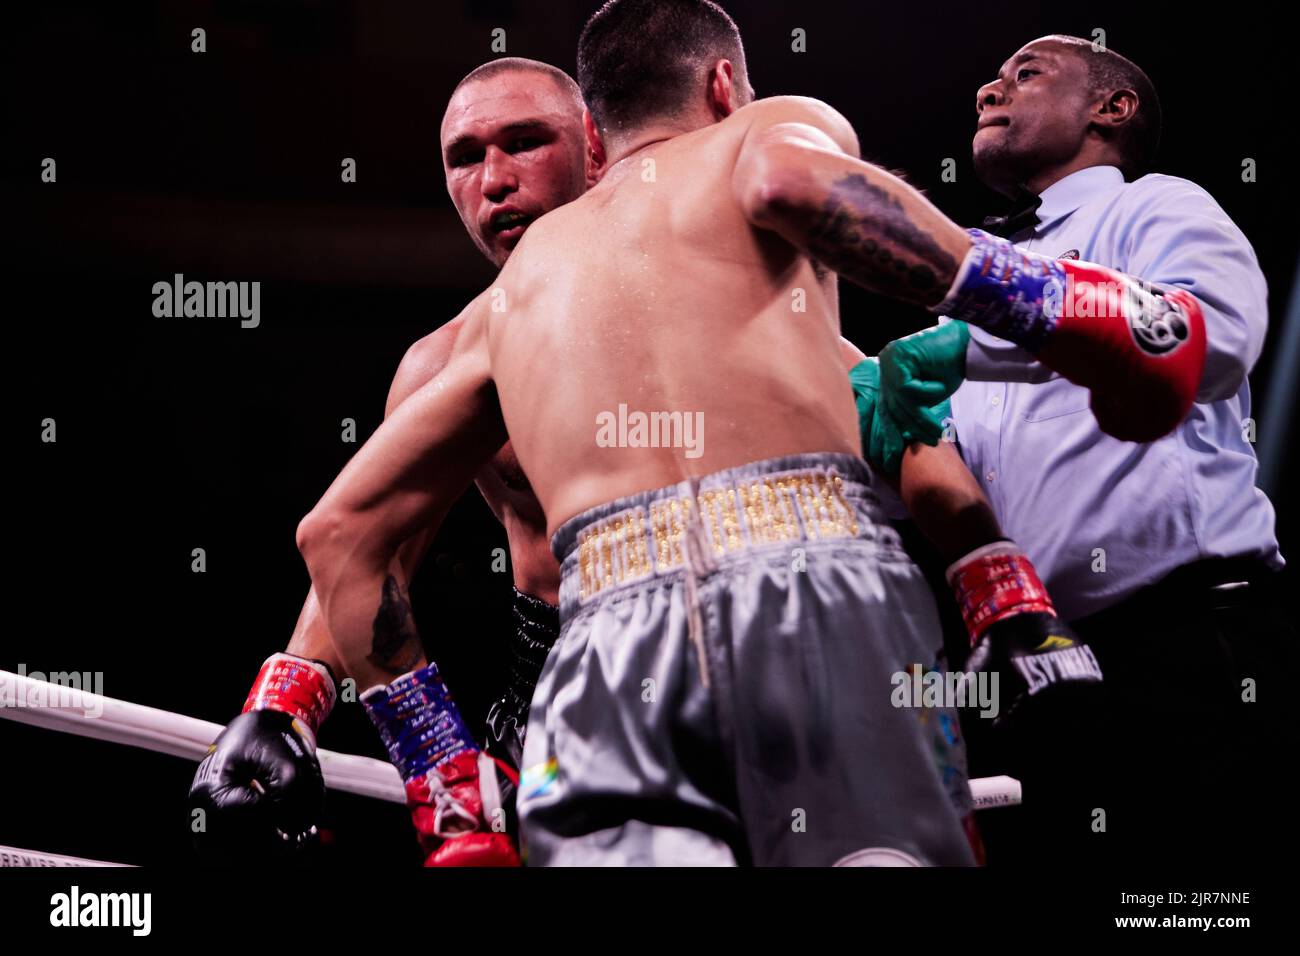 Professional boxer IBF Light-welterweight Sergey Lipinets defeats WBC Lightweight Omar Figueroa Jr. in a 12-round boxing match Stock Photo